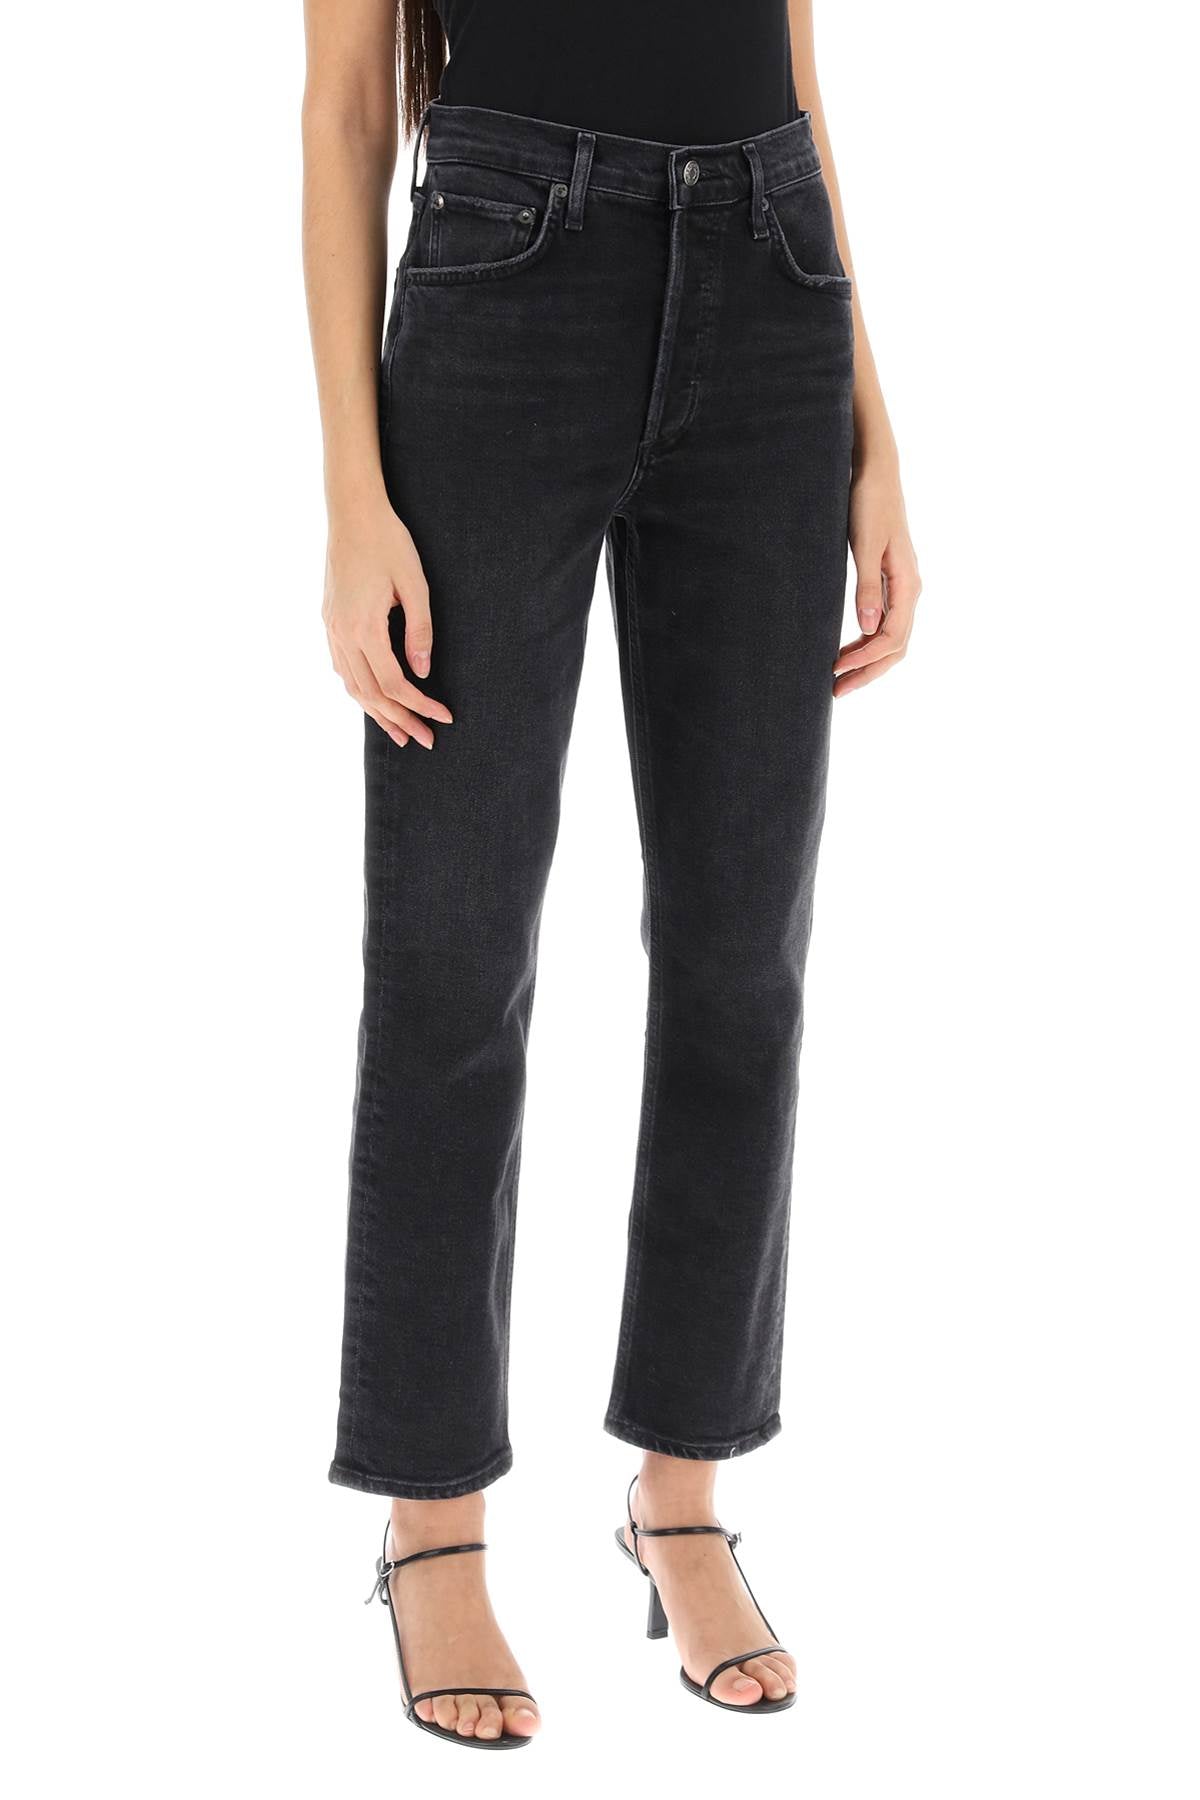 Agolde riley high-waisted jeans-1